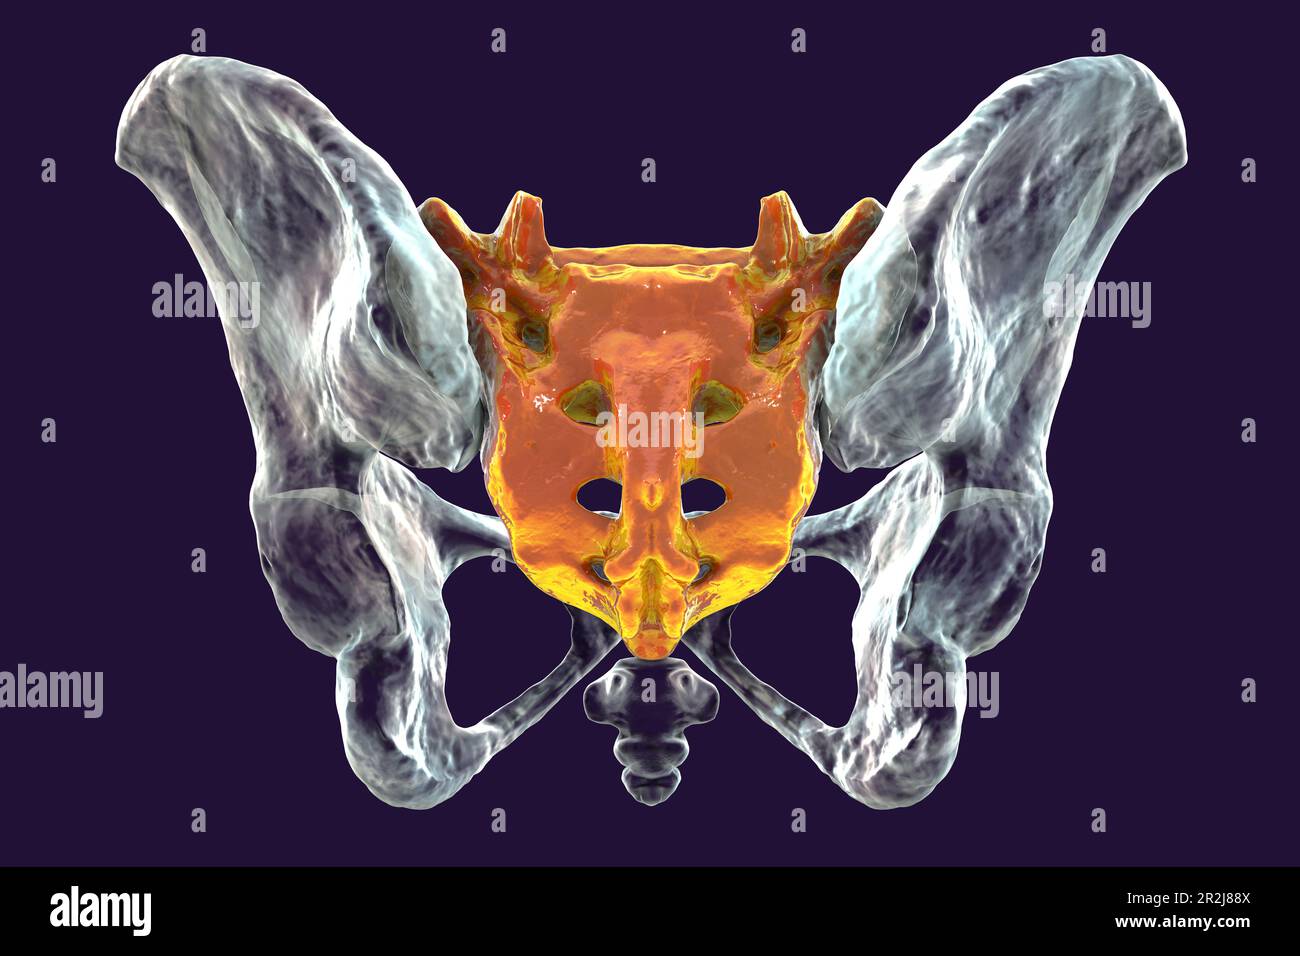 Anatomy of the sacrum bone, illustration Stock Photo